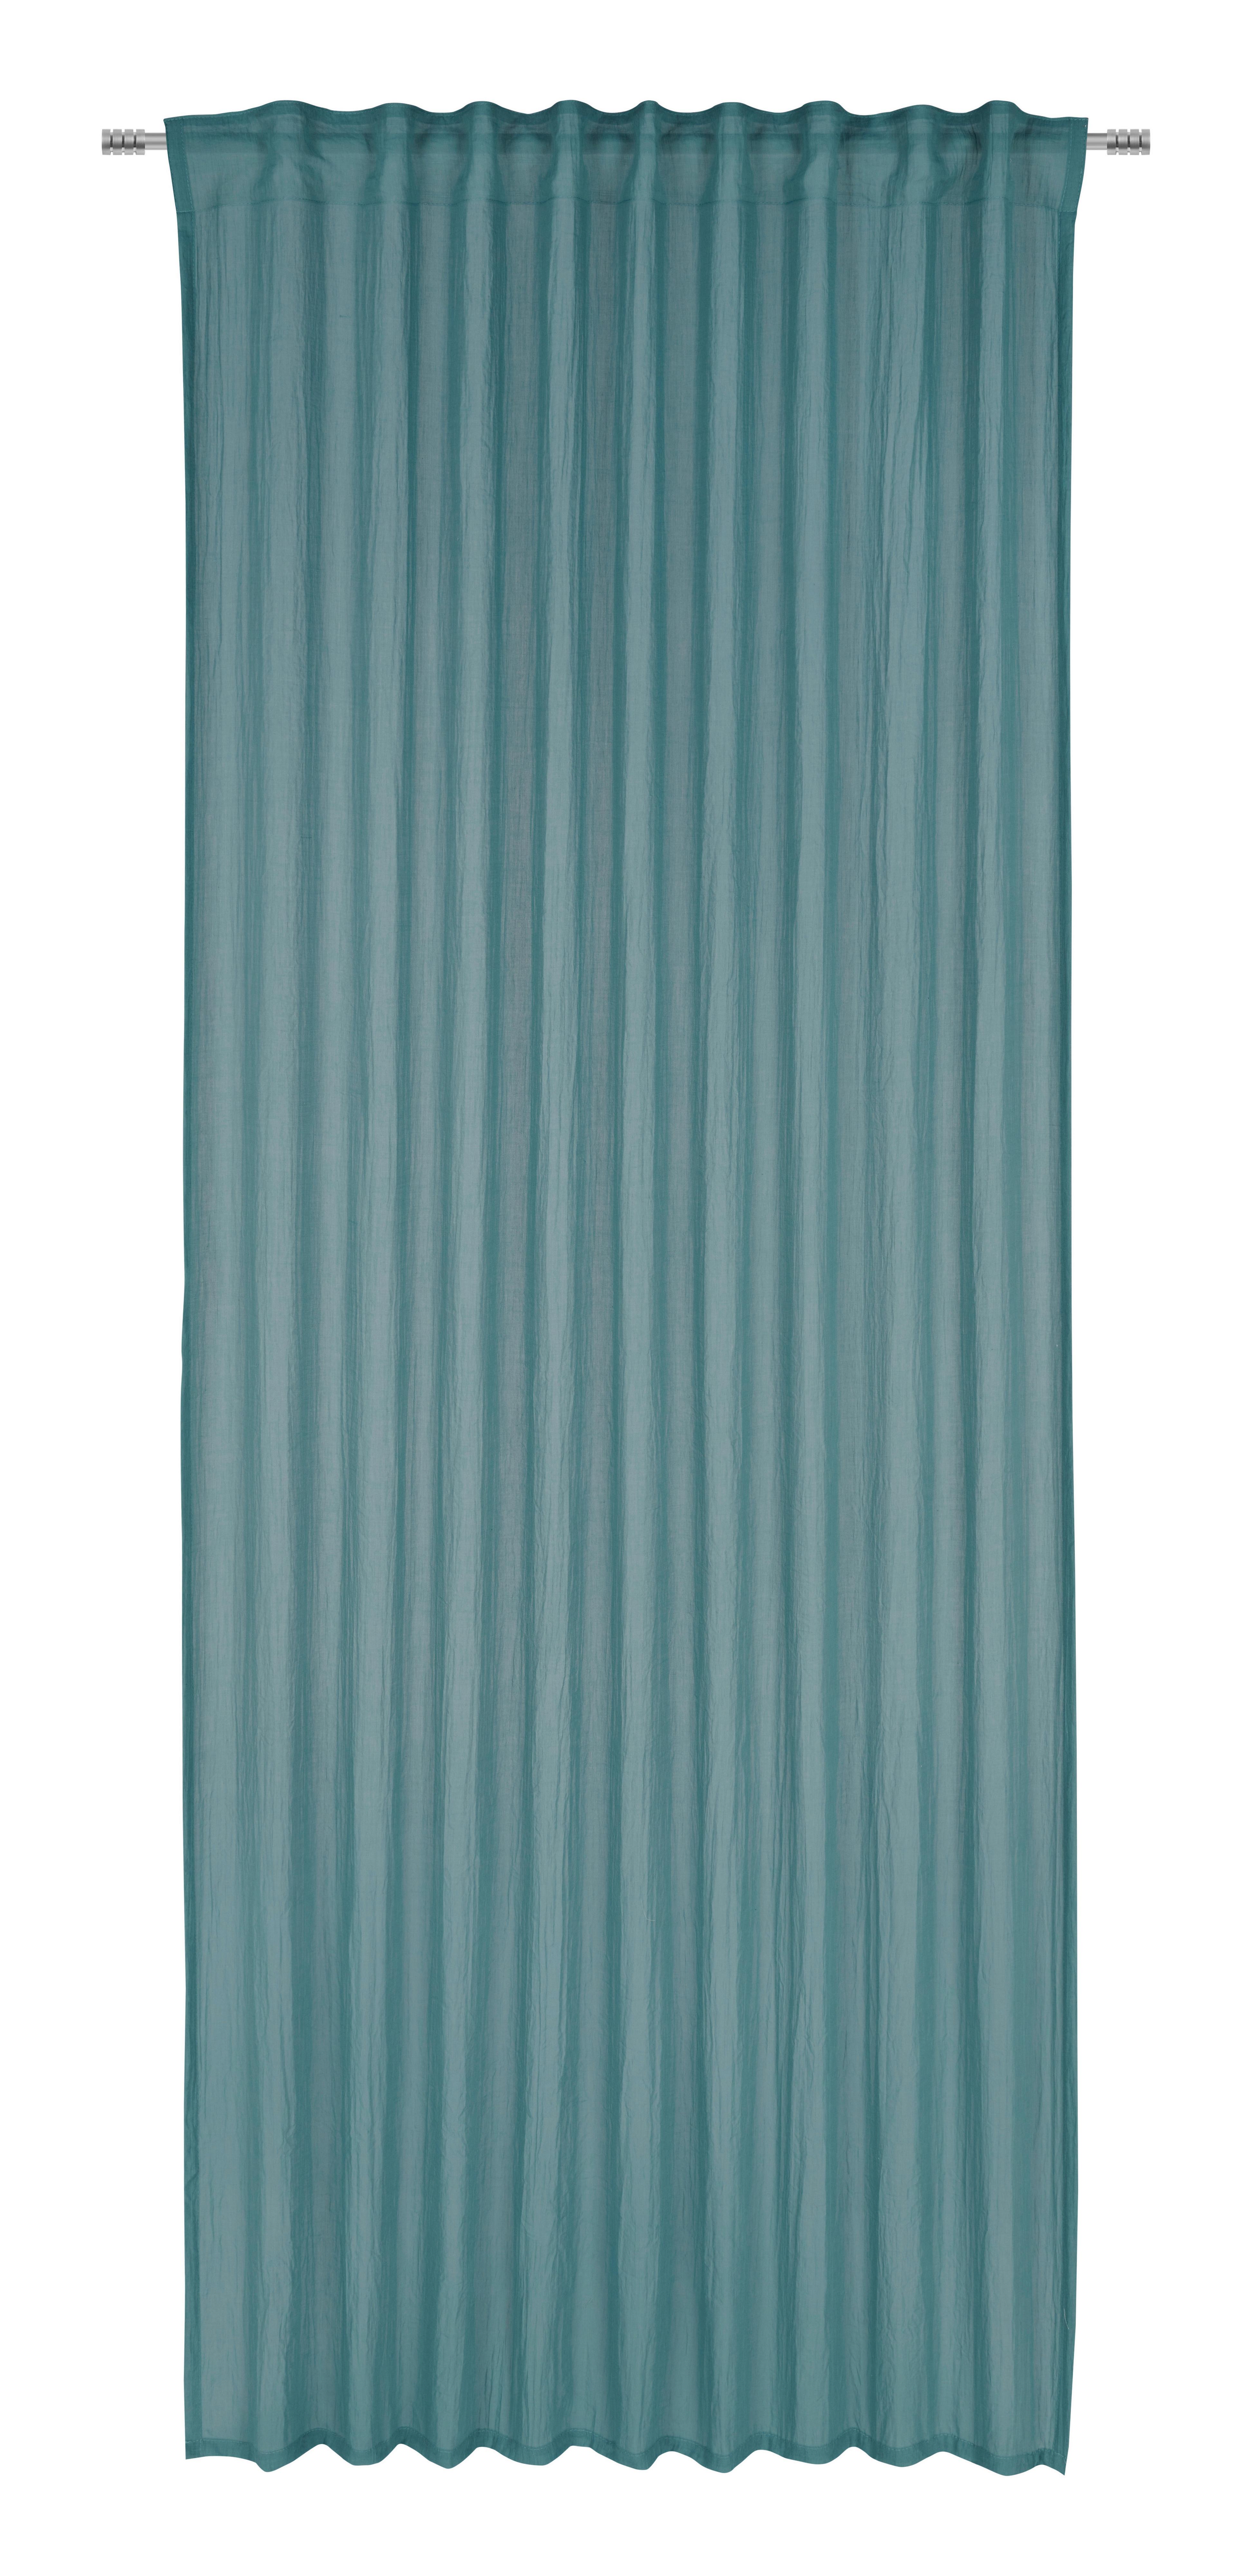 Draperie prefabricată Ramona - albastru deschis, Modern, textil (135/245cm) - Modern Living